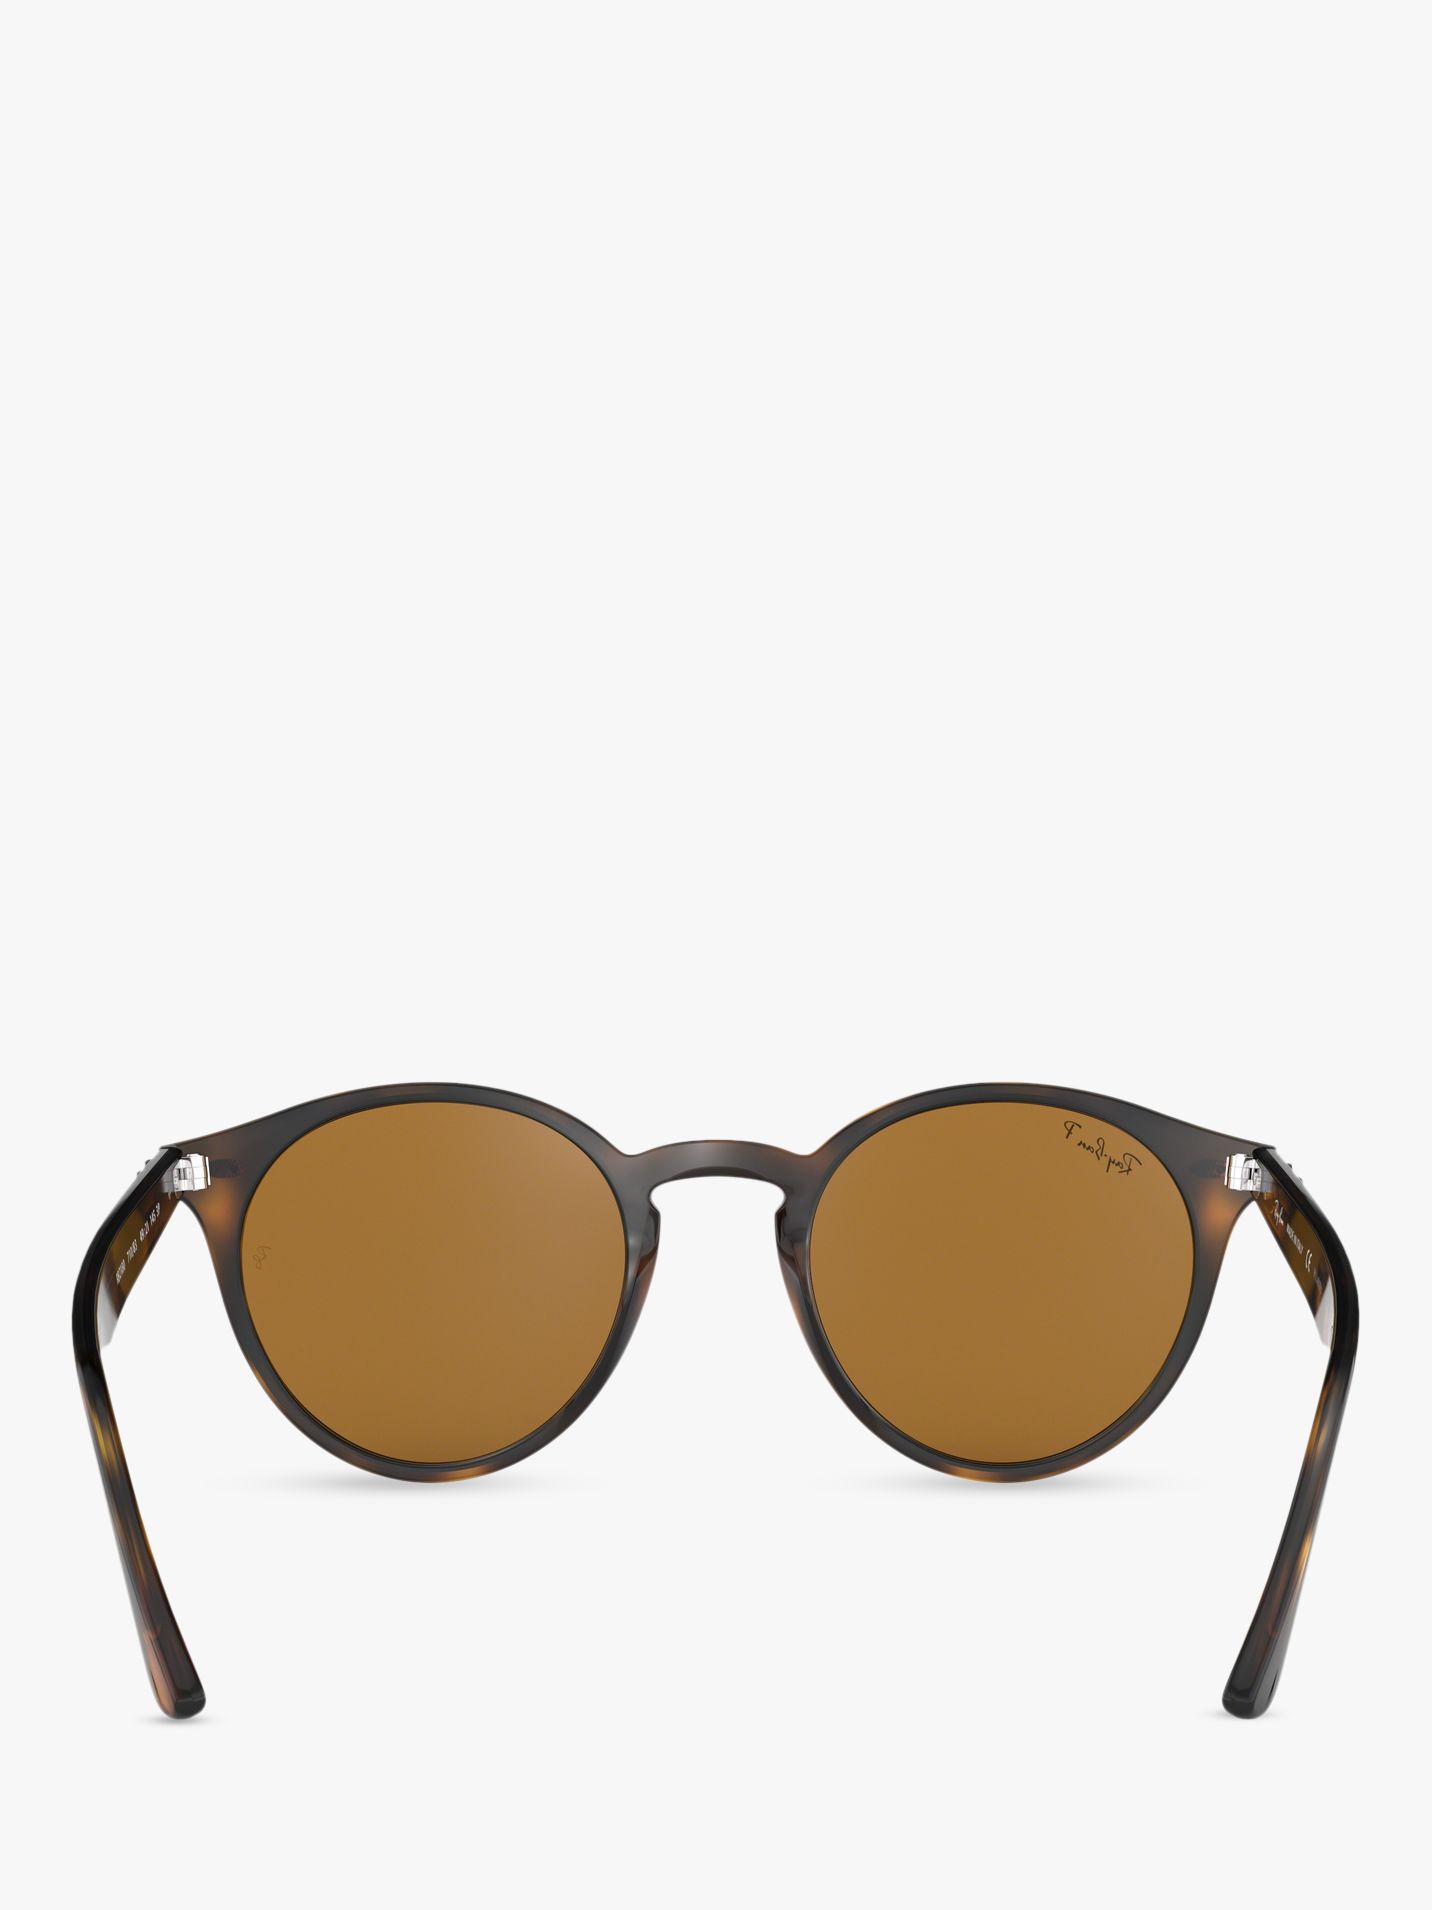 Ray-Ban RB2180 Men's Round Framed Sunglasses, Shiny Dark Havana